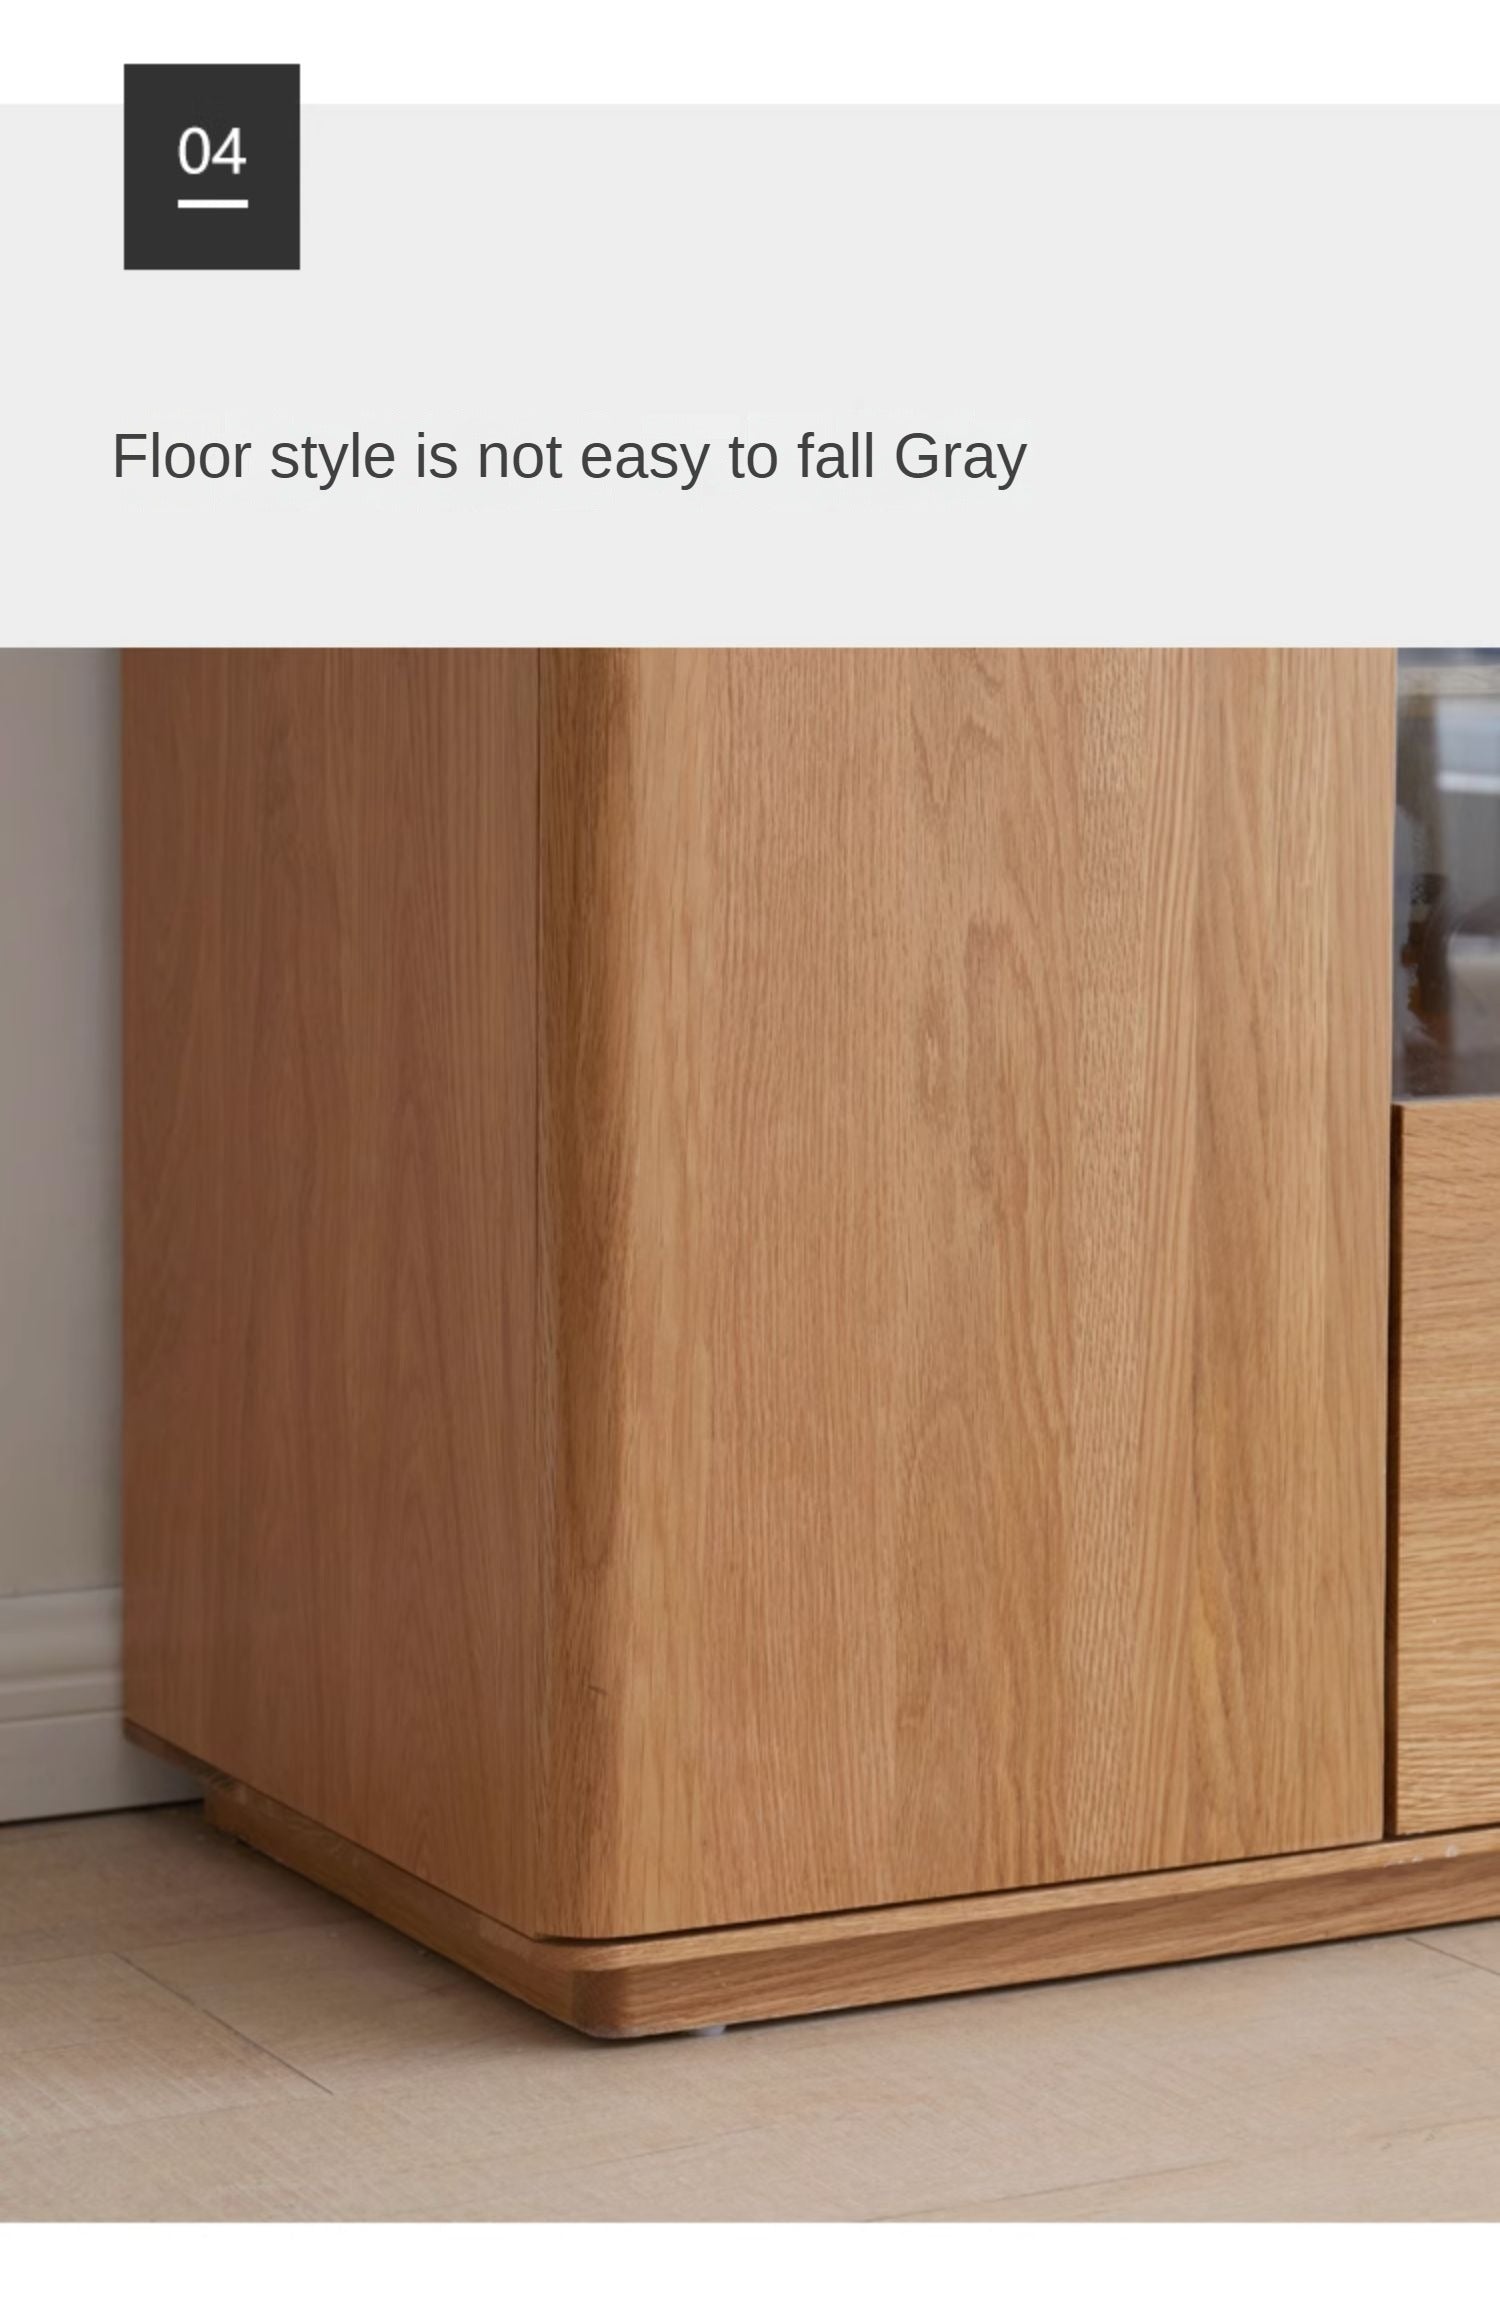 Oak solid wood sideboard high kitchen storage cabinet "